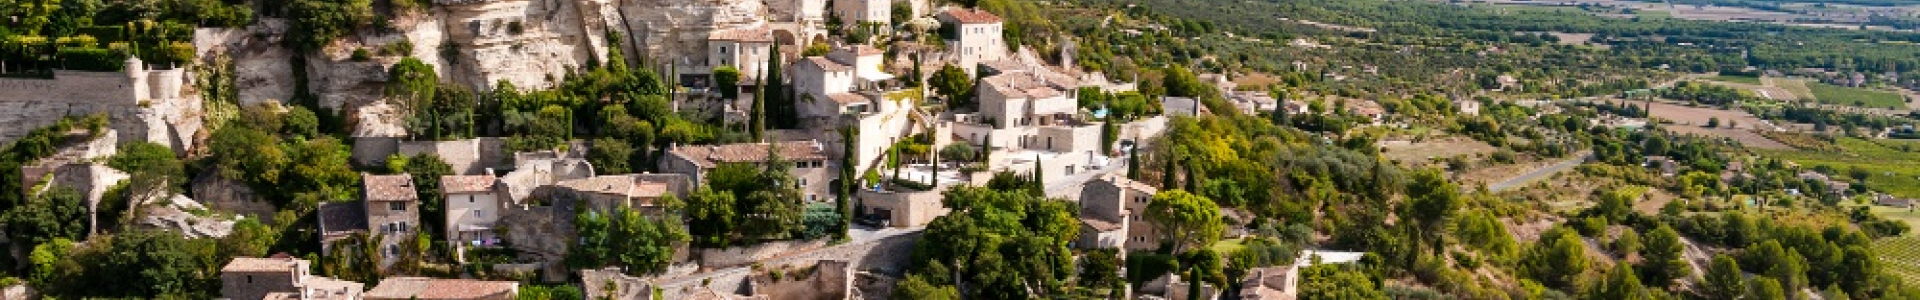 Vaucluse en Provence : escapades printanières en chambres d'hôtes, jusqu'à - 33%